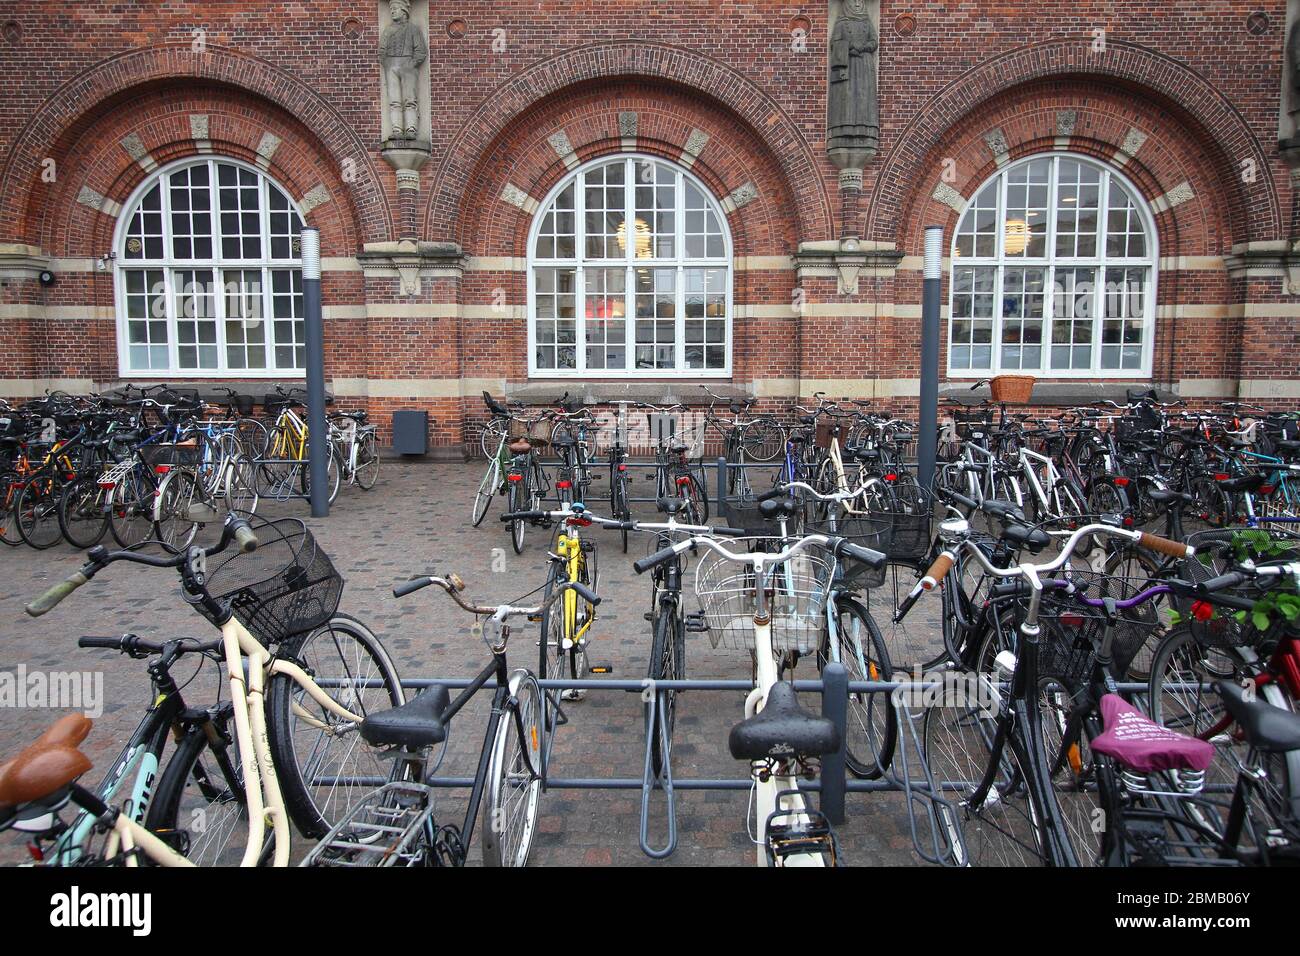 KOPENHAGEN, DÄNEMARK - 10. MÄRZ 2011: Fahrräder vor dem Hauptbahnhof in Kopenhagen geparkt. 579,513 Leben in der dänischen Hauptstadt Kopenhagen. Stockfoto